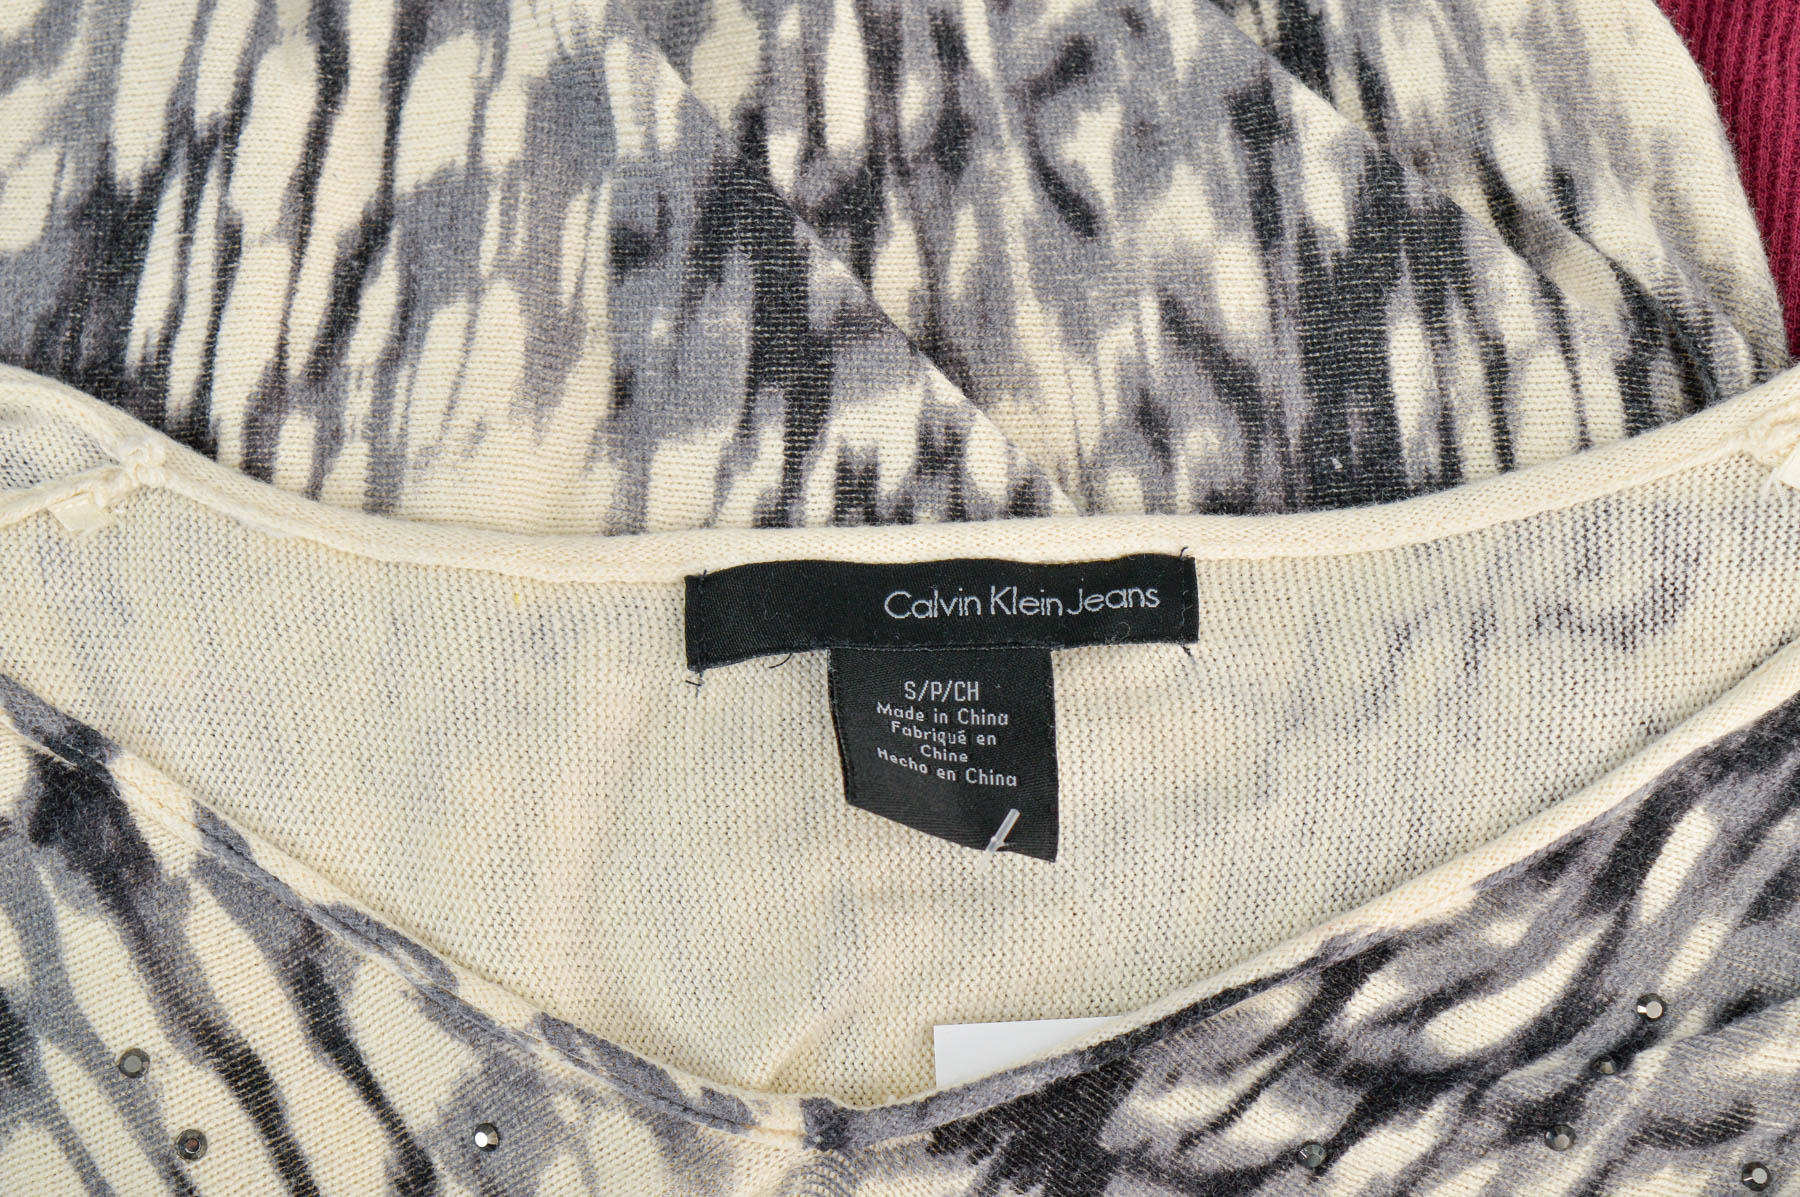 Women's tunic - Calvin Klein Jeans - 2